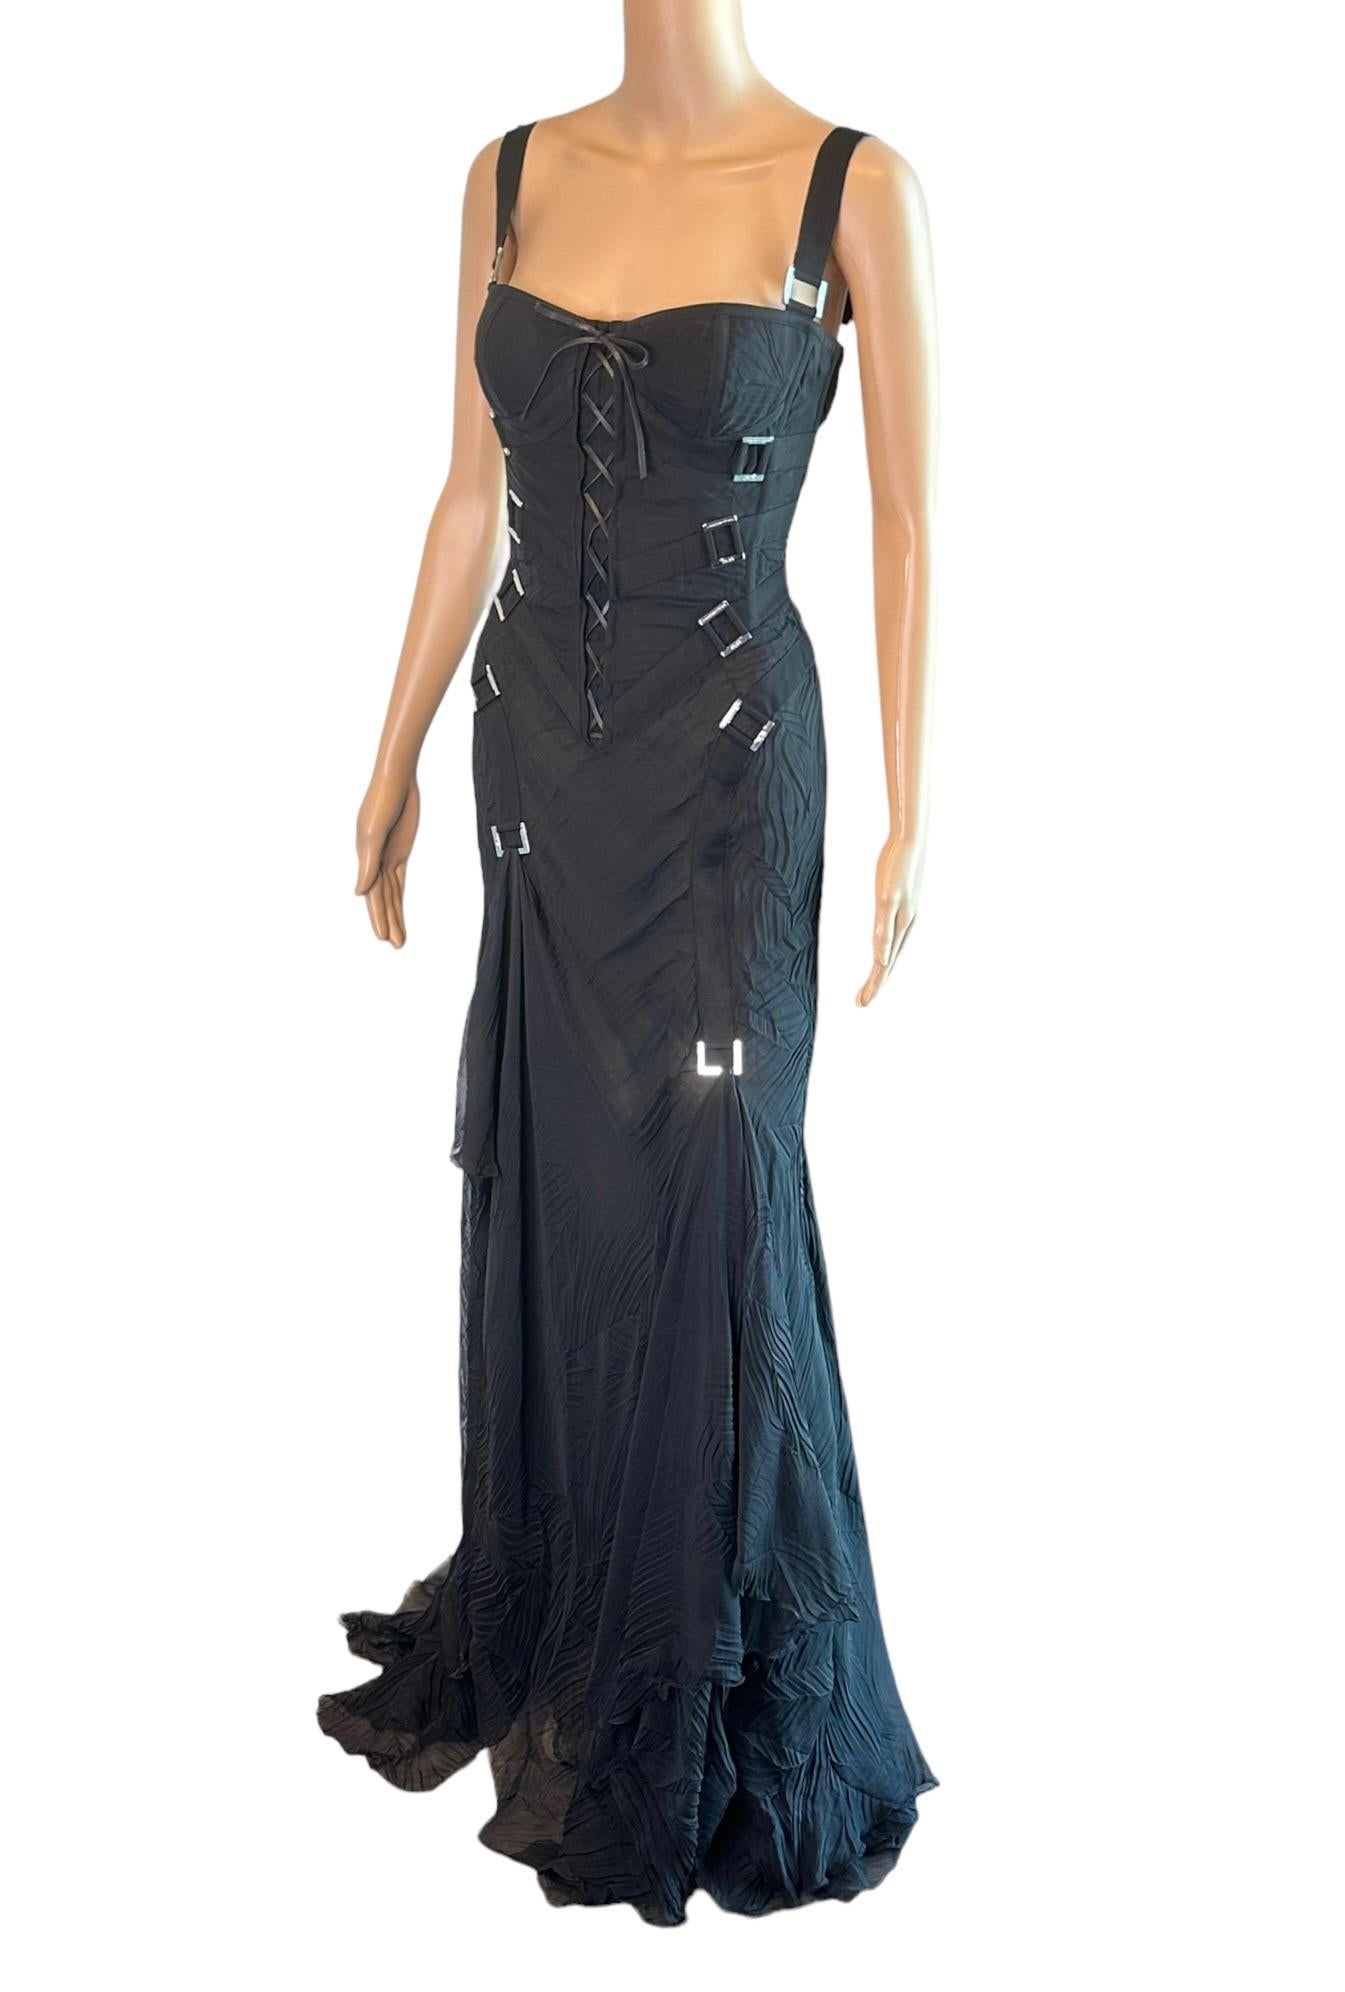 Versace F/W 2003 Bondage Bustier Buckle Detail Lace Up Black Evening Dress Gown For Sale 6